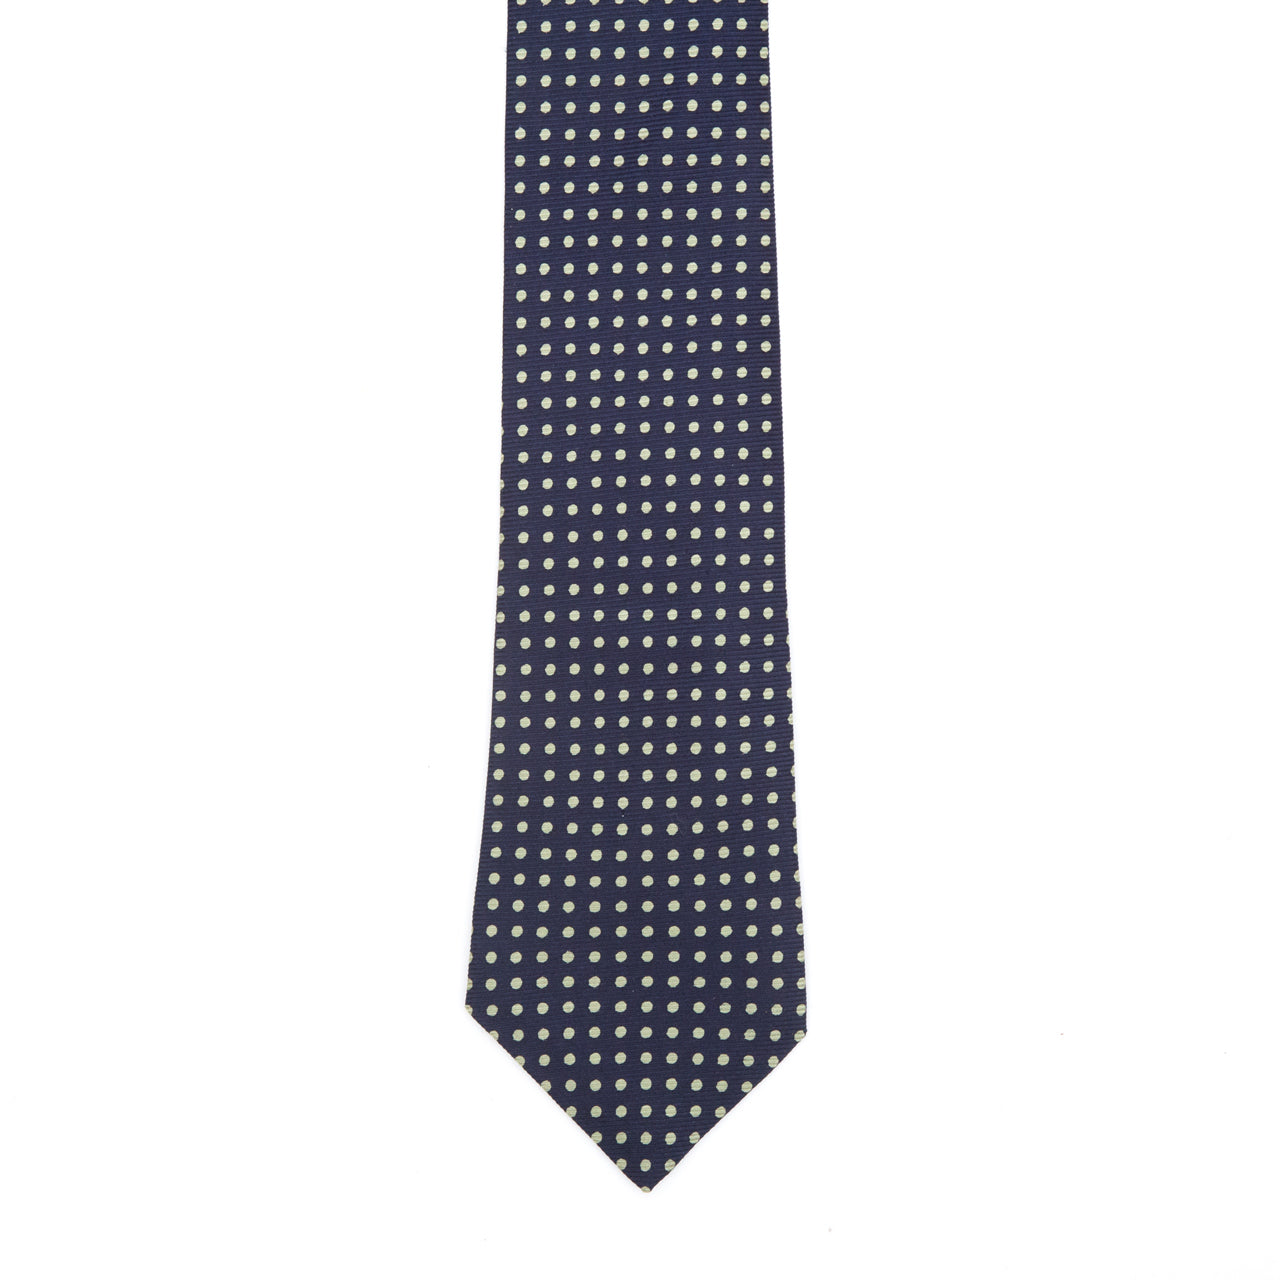 Navy blue speckled tie